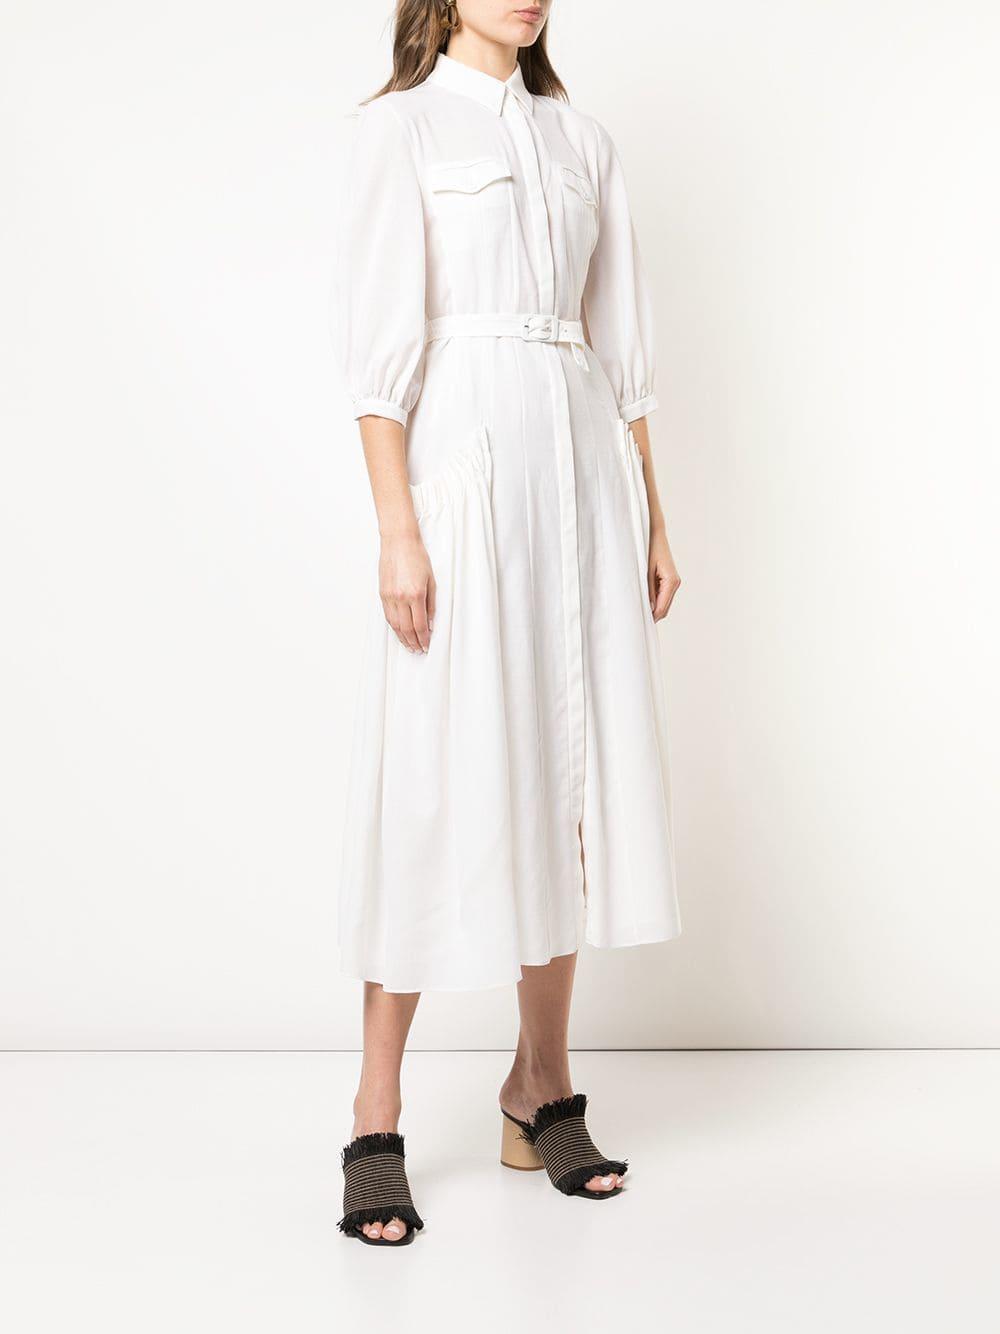 Gabriela Hearst Wool Belted Shirt Dress in White - Lyst